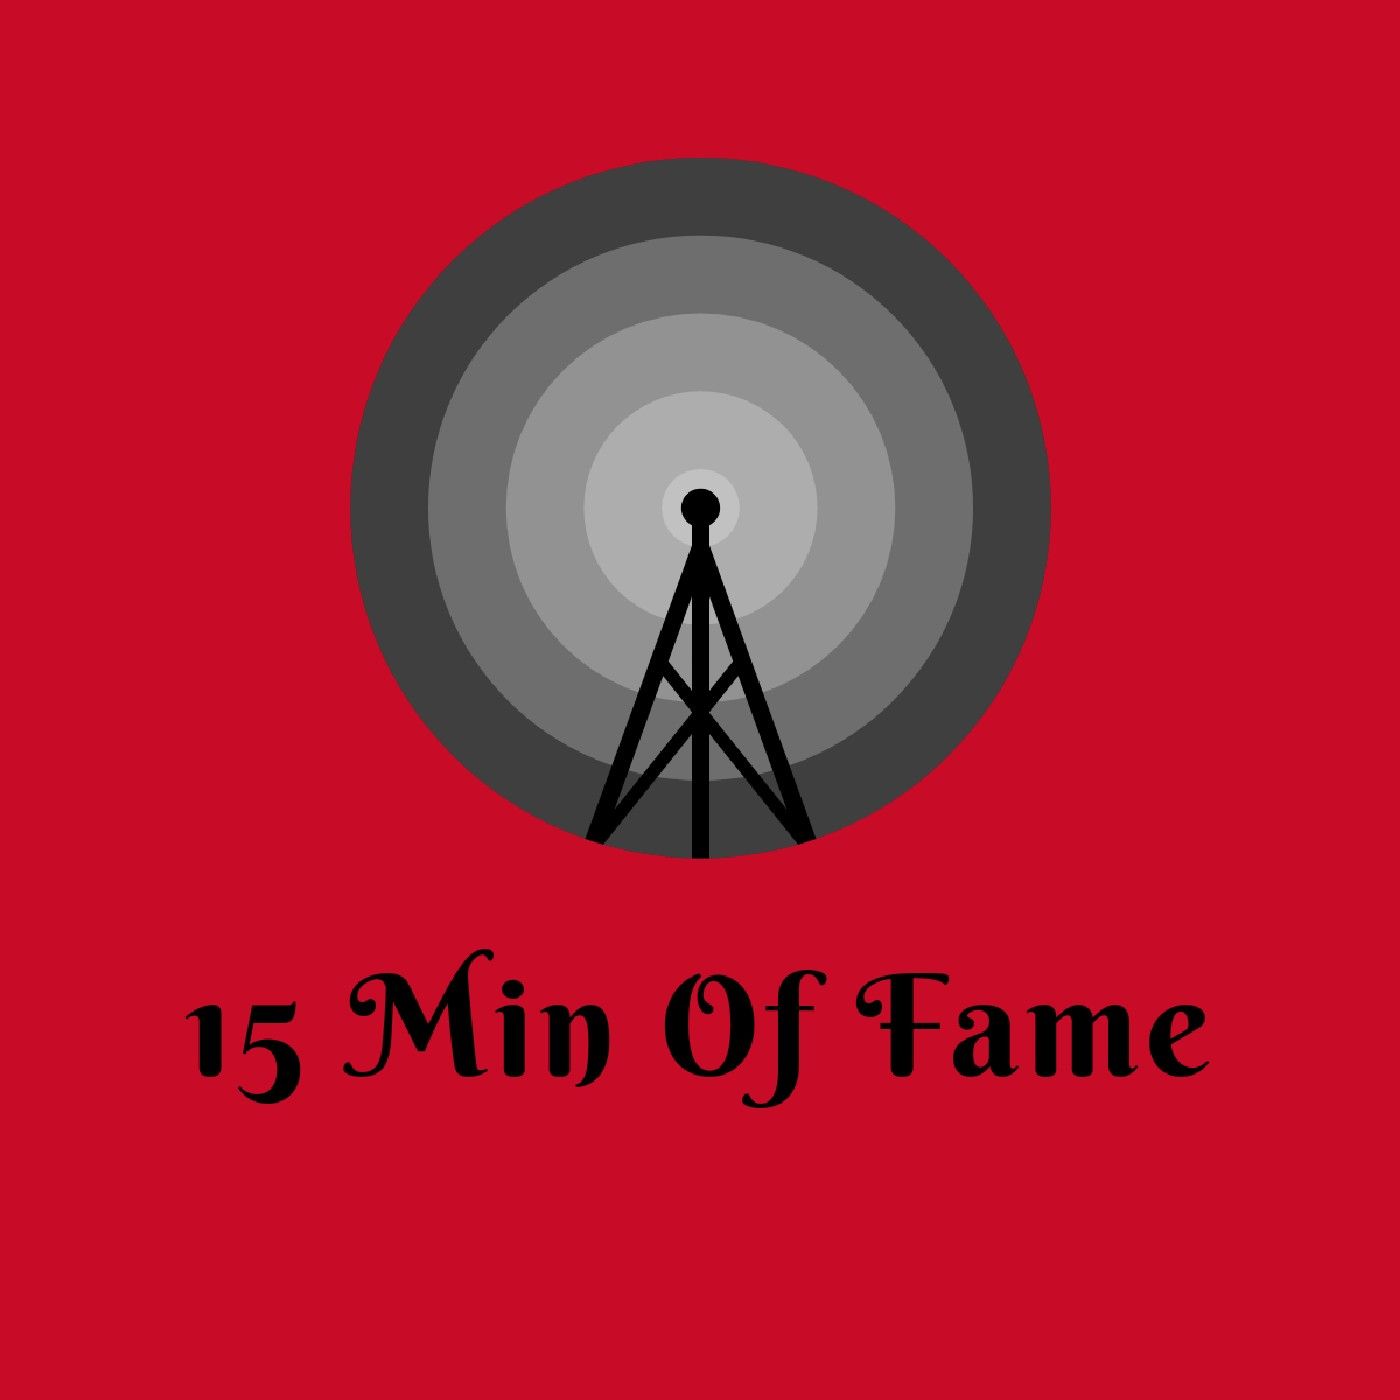 15 Min of Fame's podcast